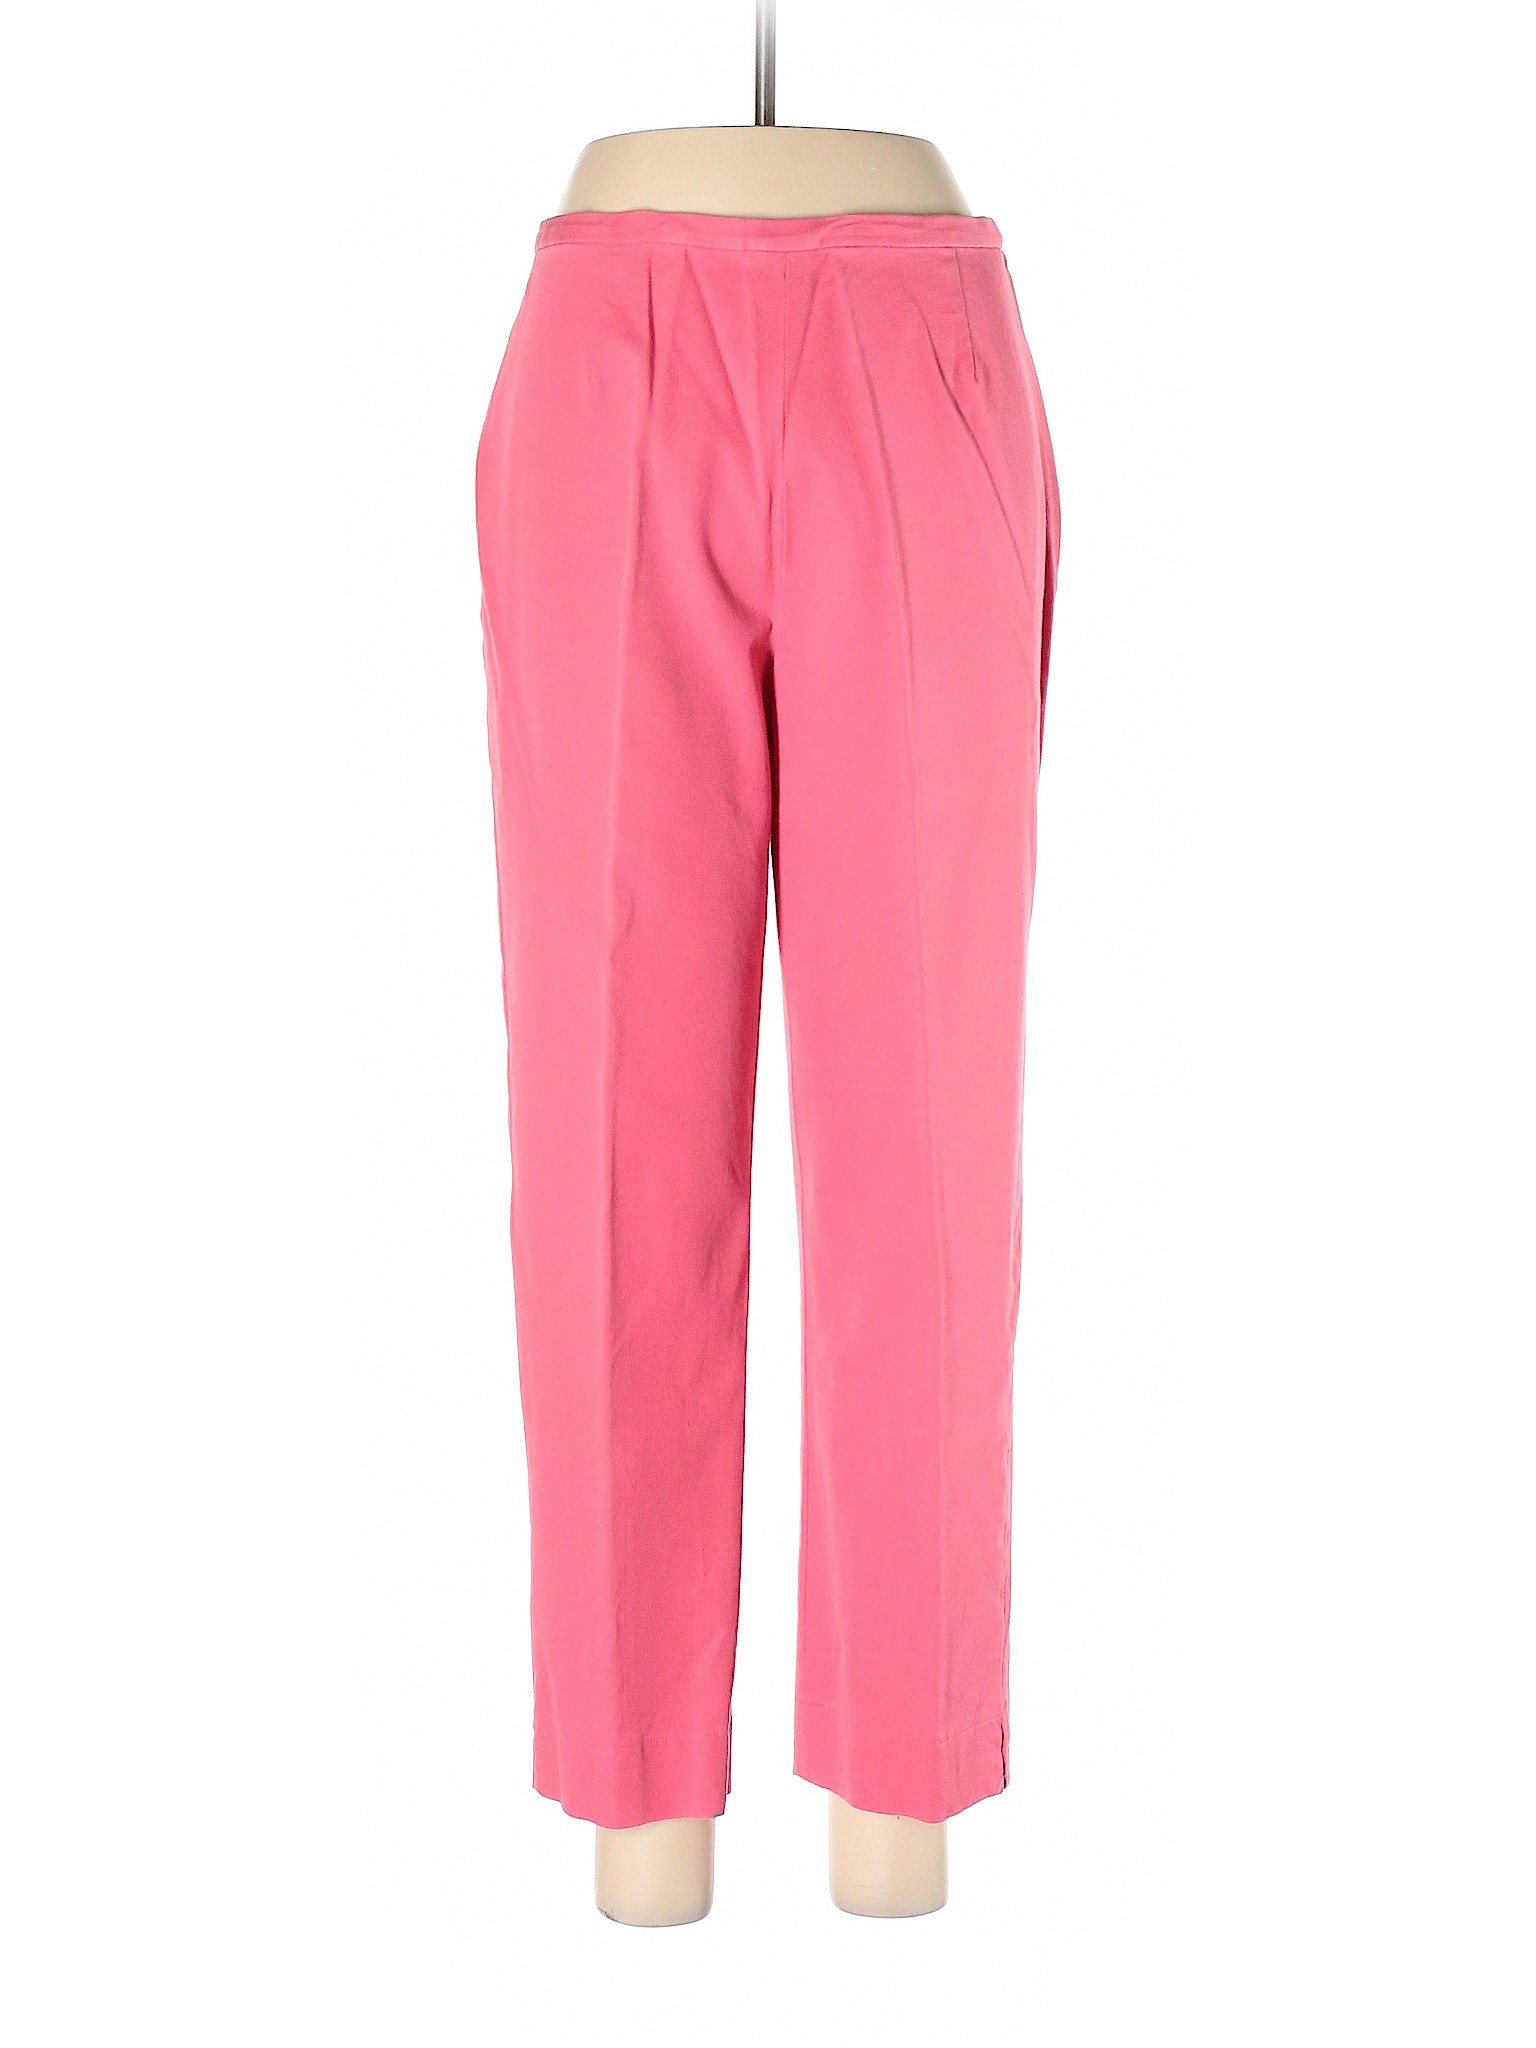 Doncaster Women Pink Dress Pants 8 | eBay